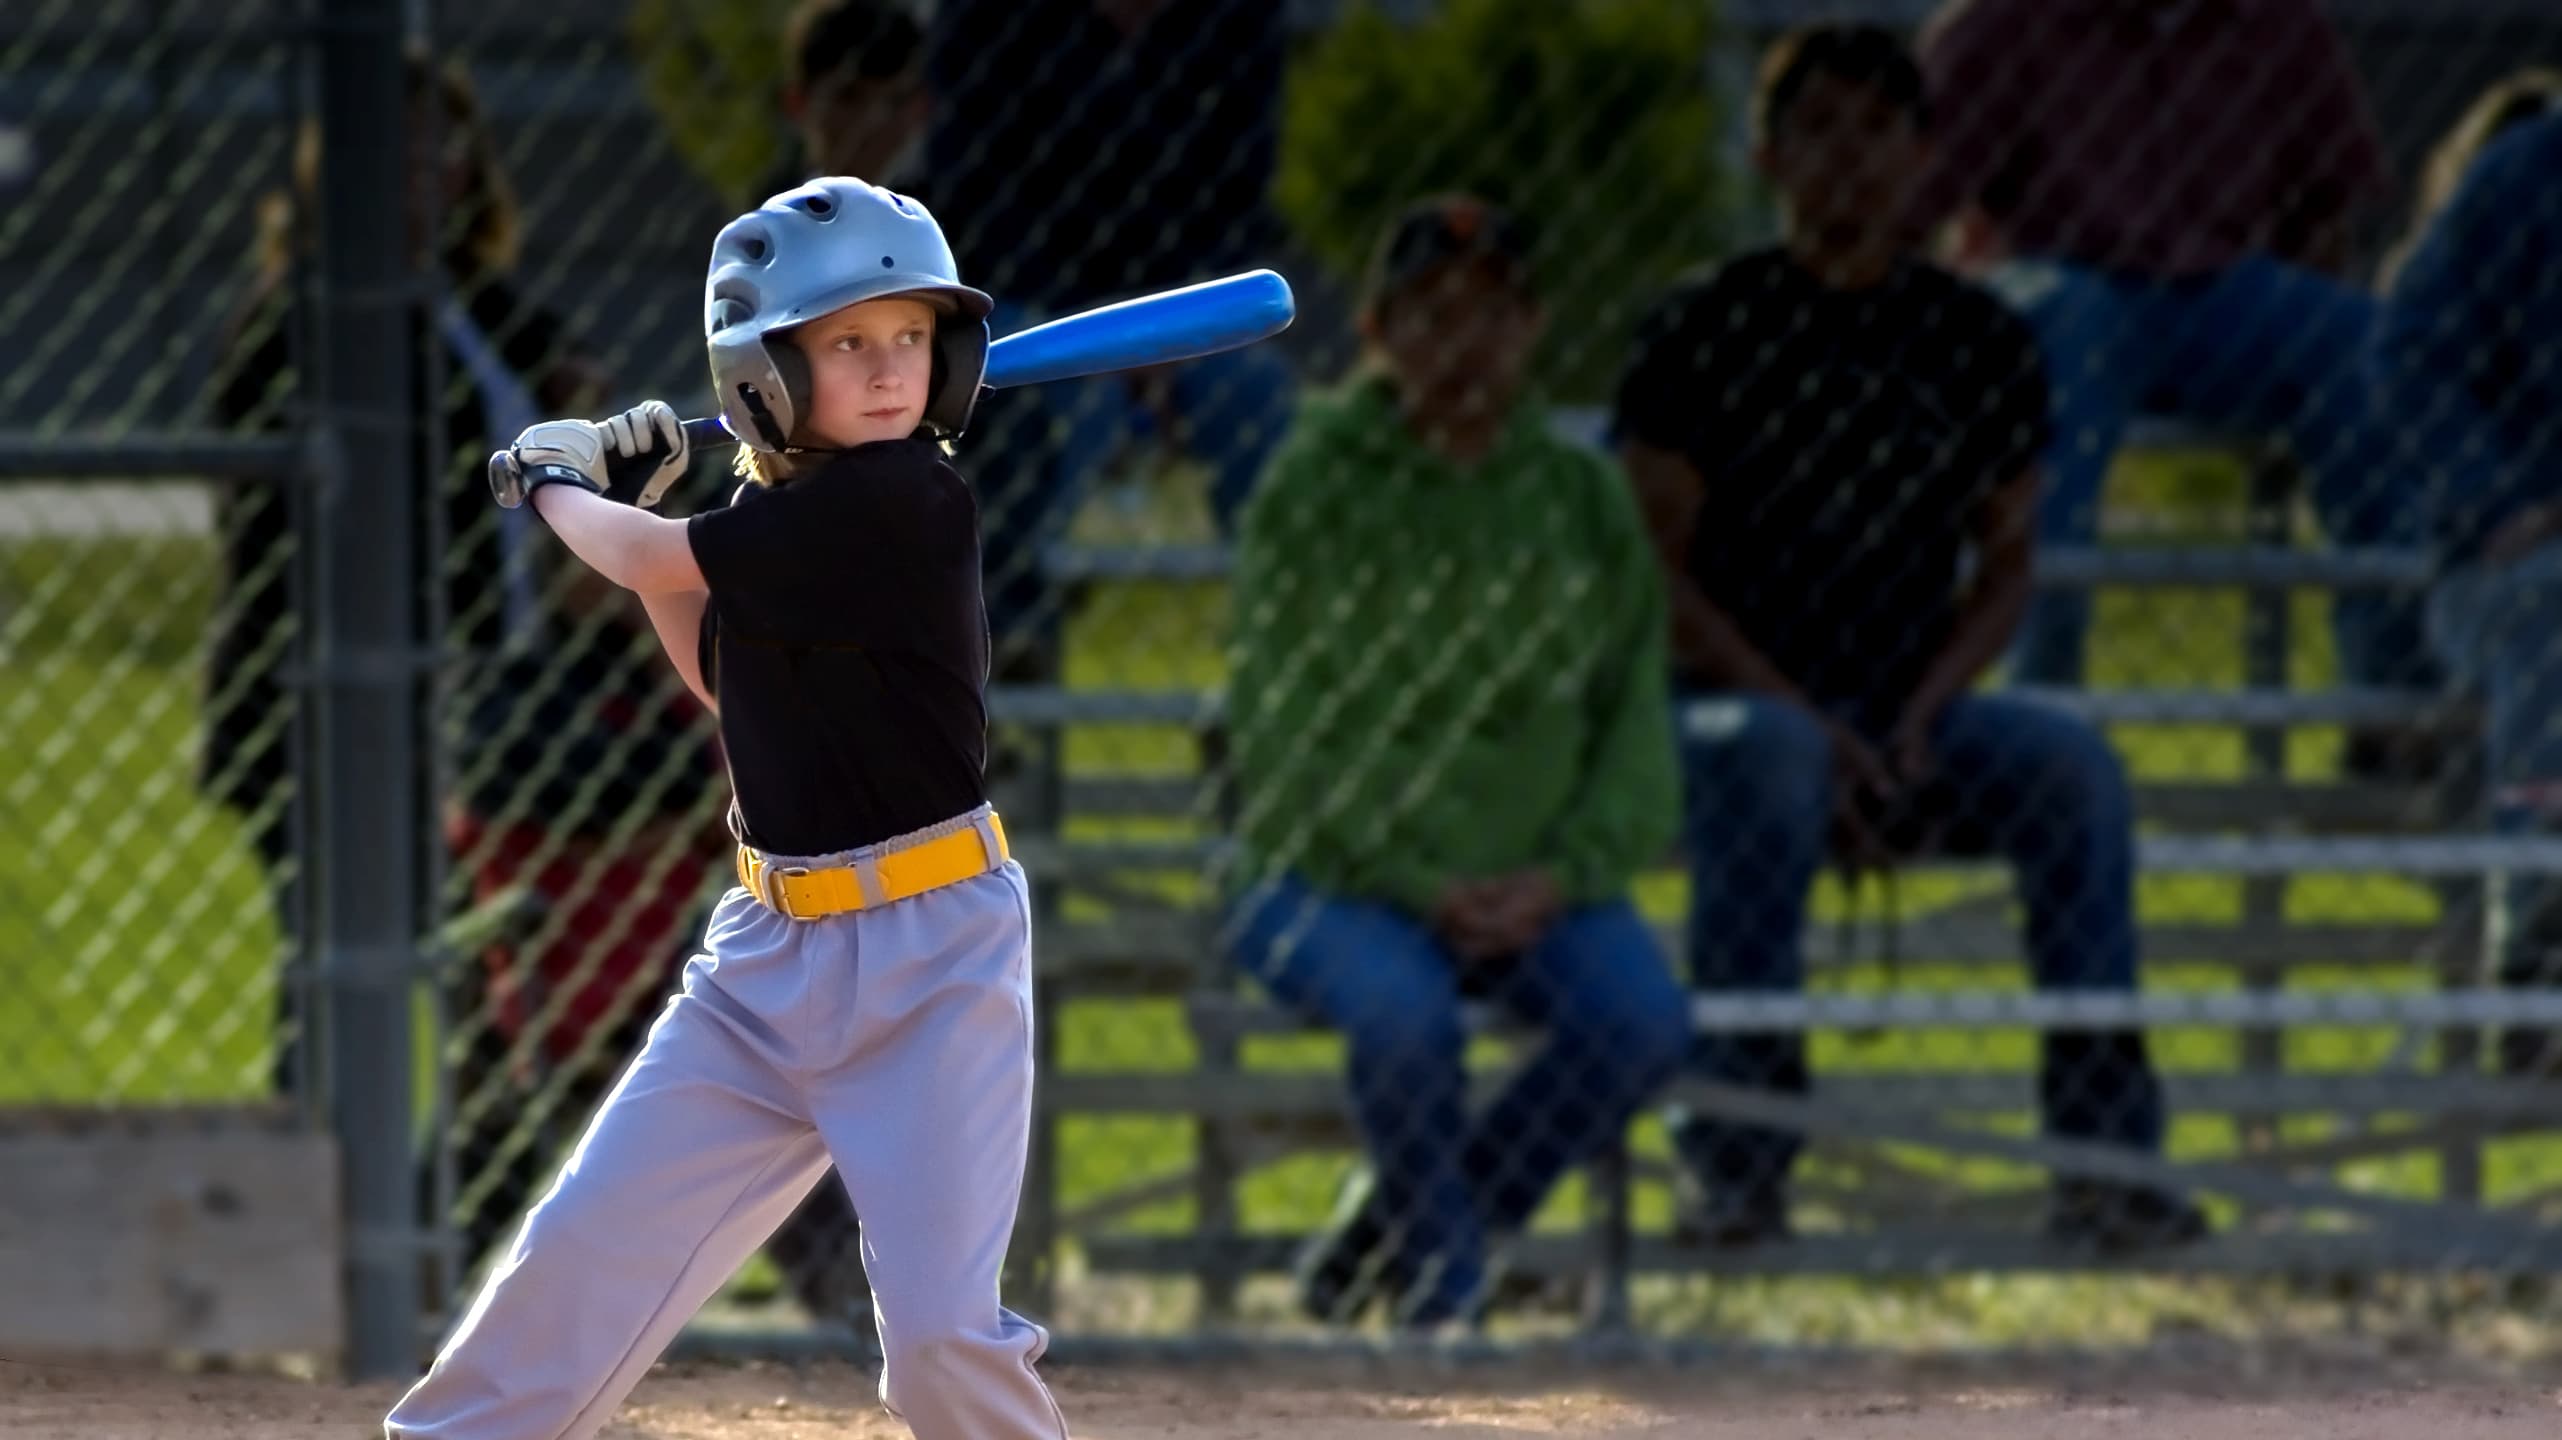 young boy playing baseball